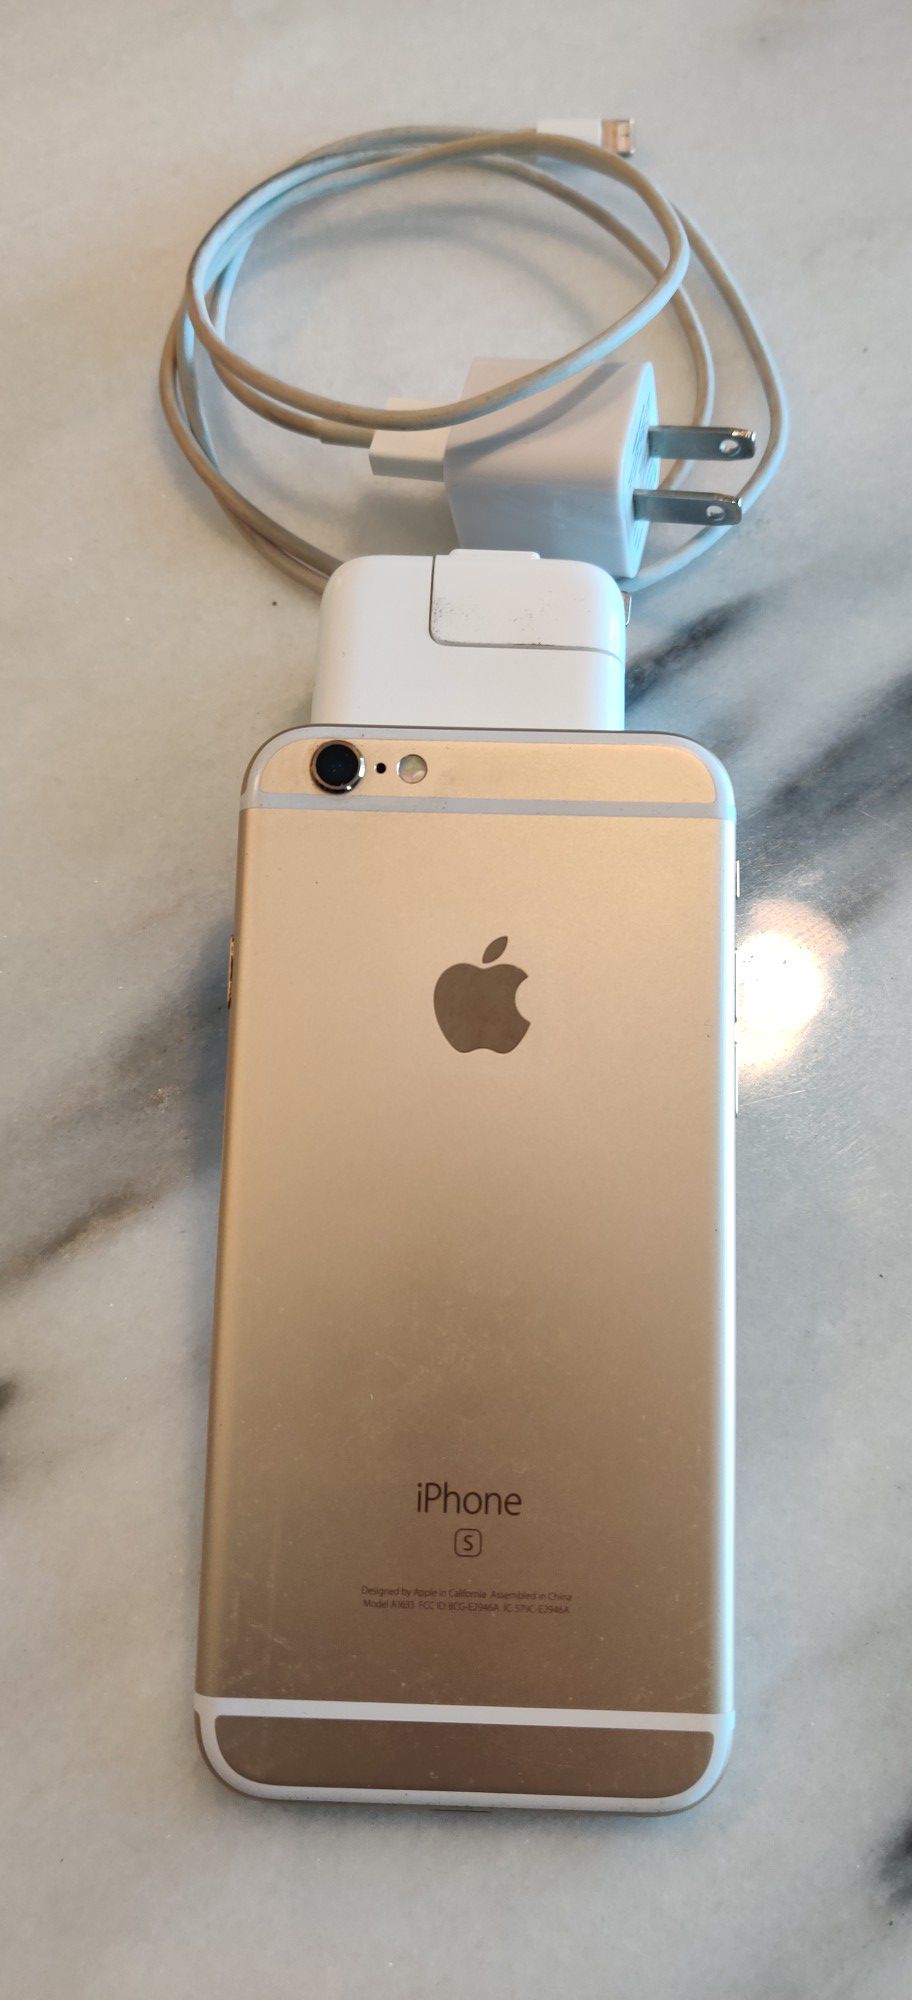 iPhone 6s - Gold - 16g - ATT